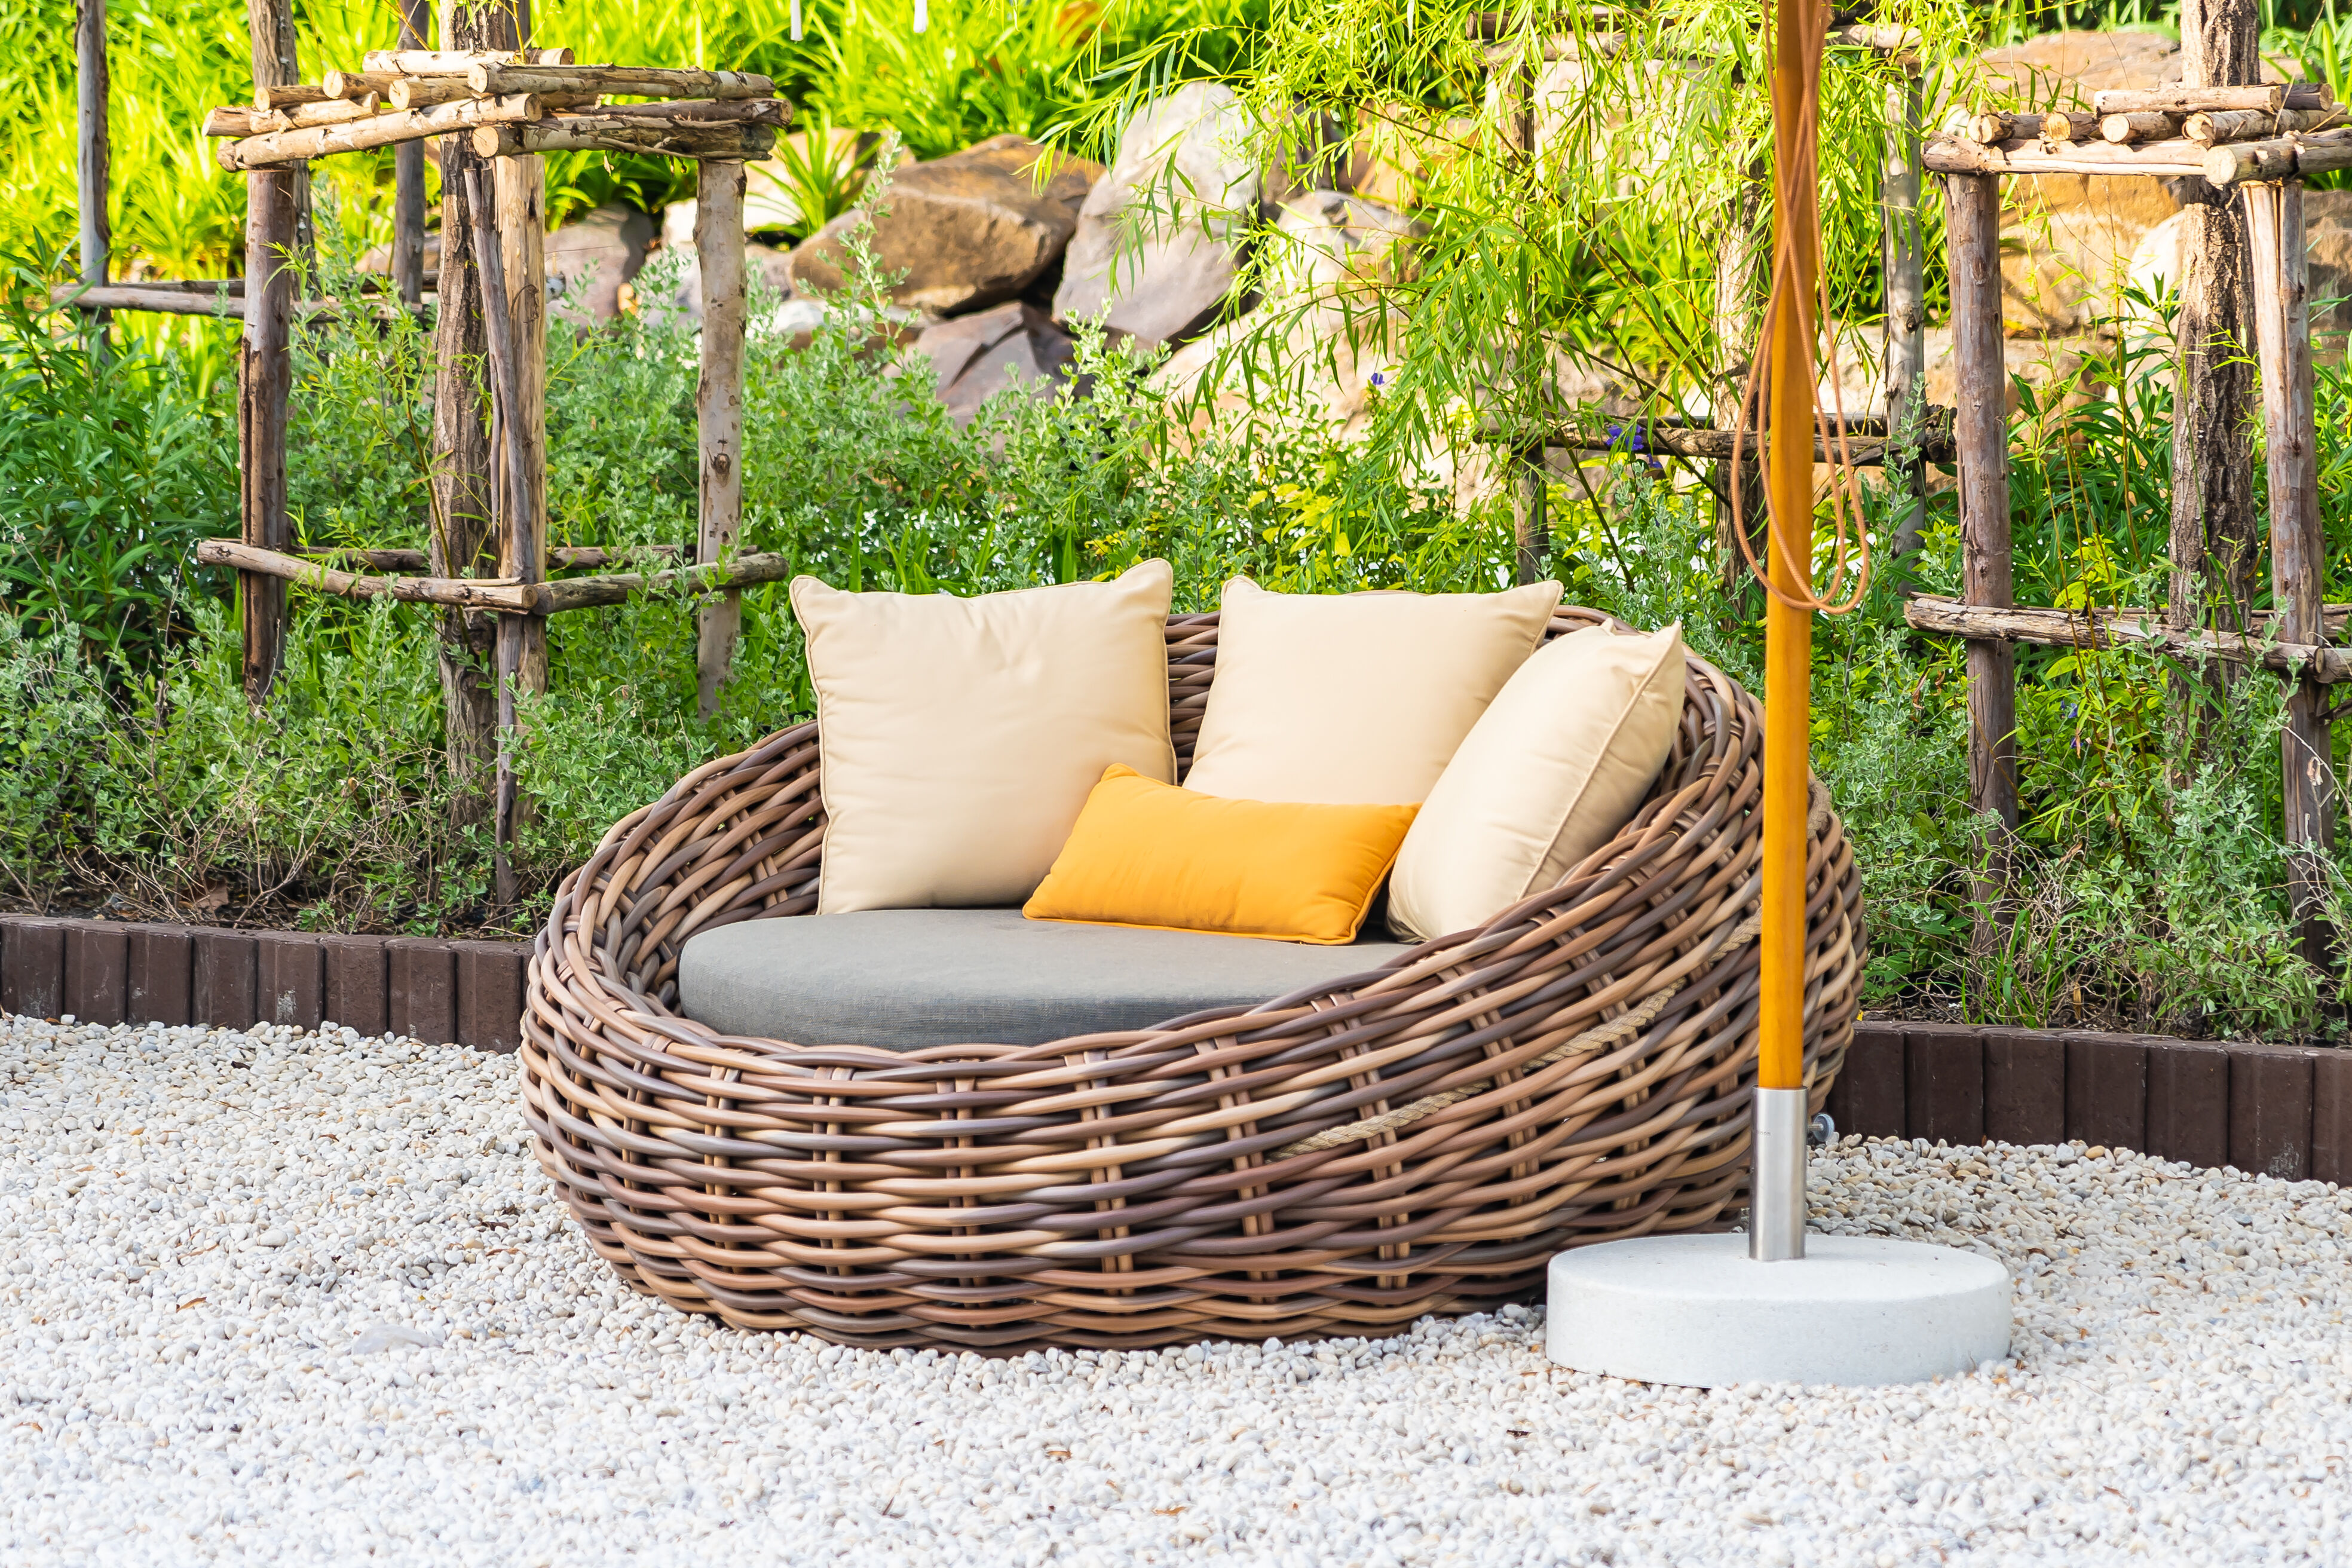 umbrella-deck-chair-around-outdoor-swimming-pool-hotel-resort-with-sea-ocean-beach-coconut-palm-tree